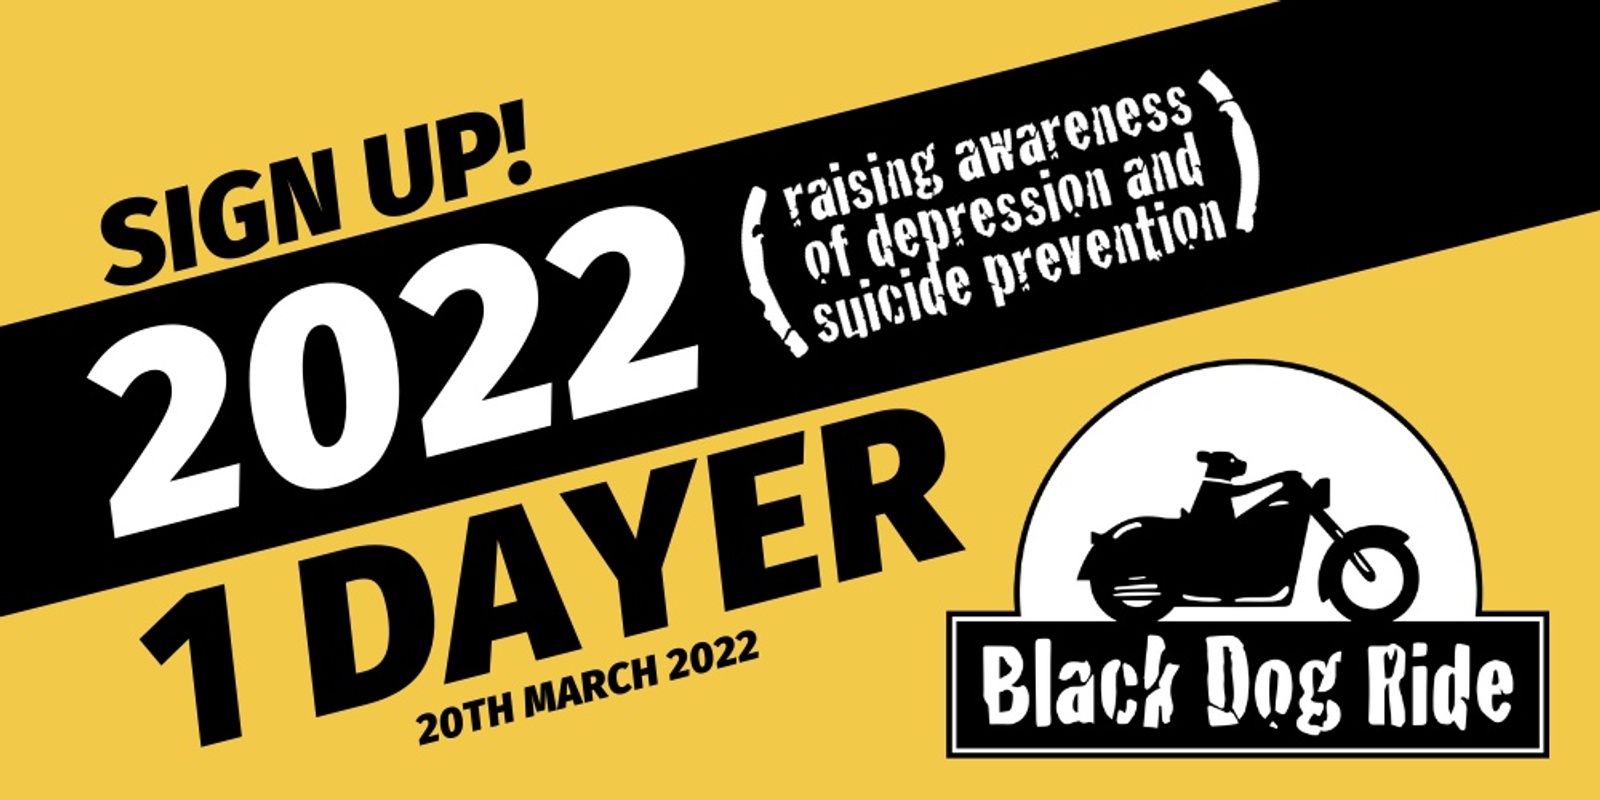 Banner image for Virtual - Black Dog Ride 1 Dayer 2022